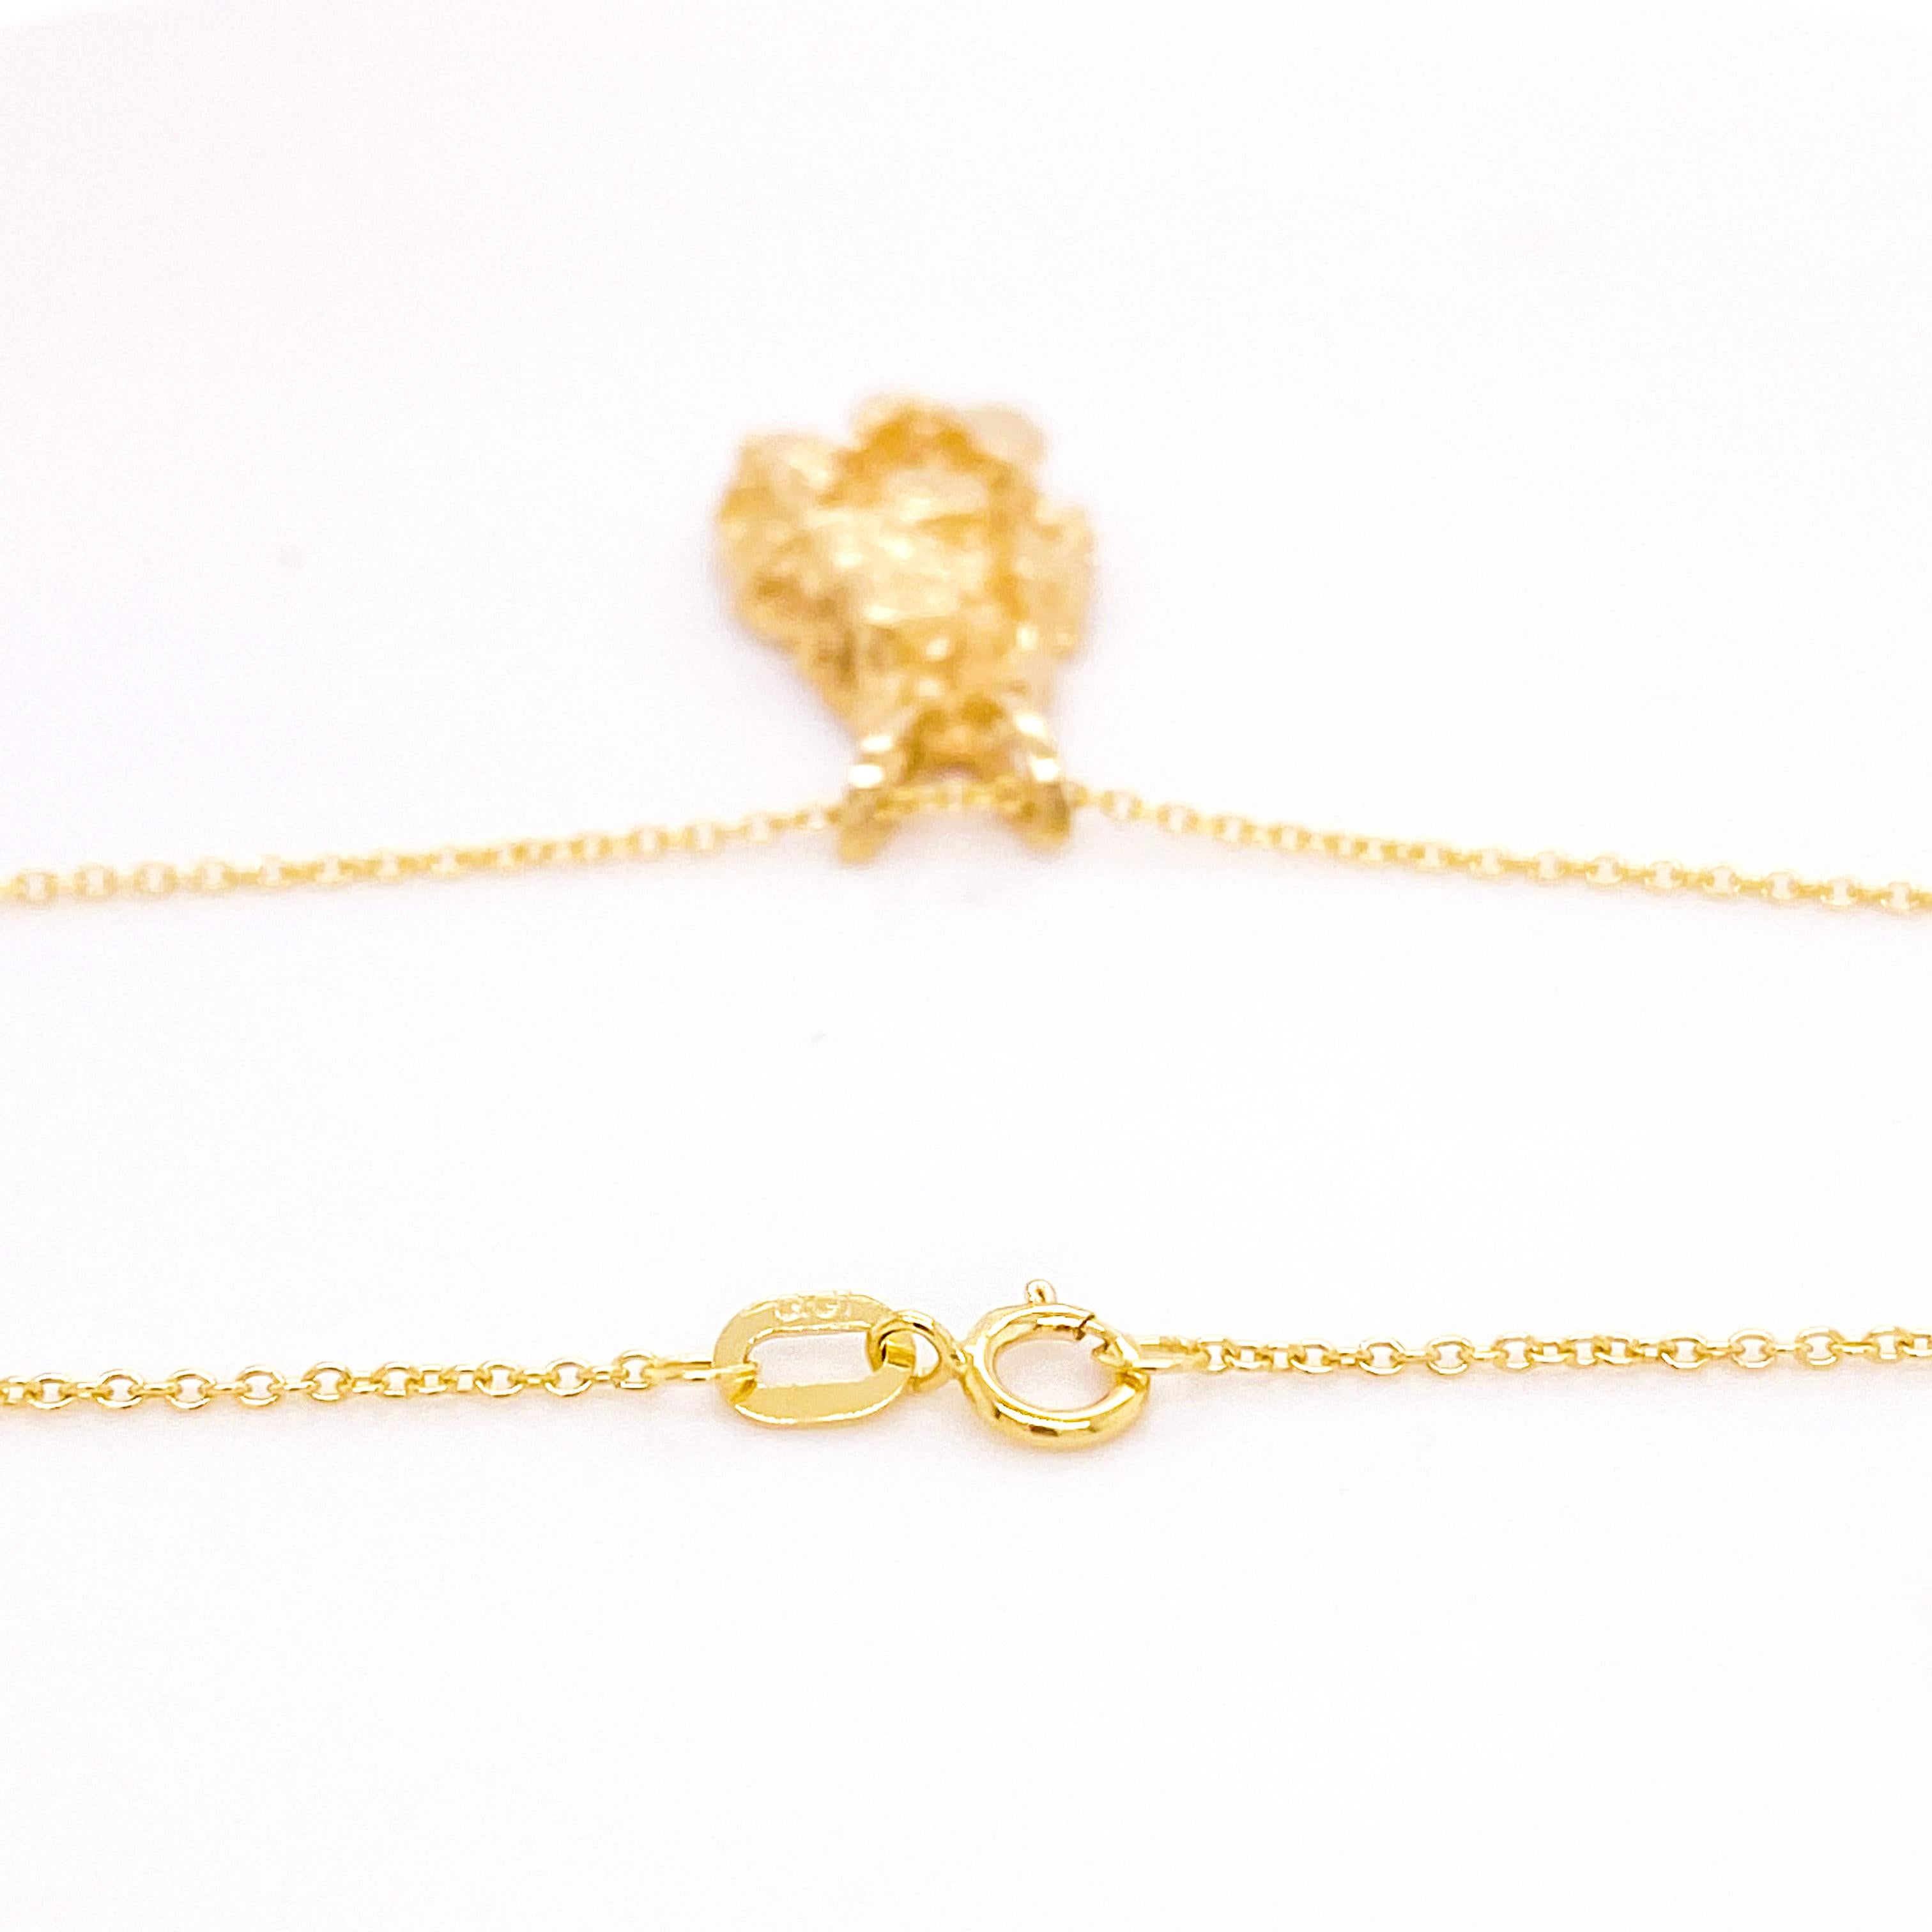 gold nugget pendant necklace